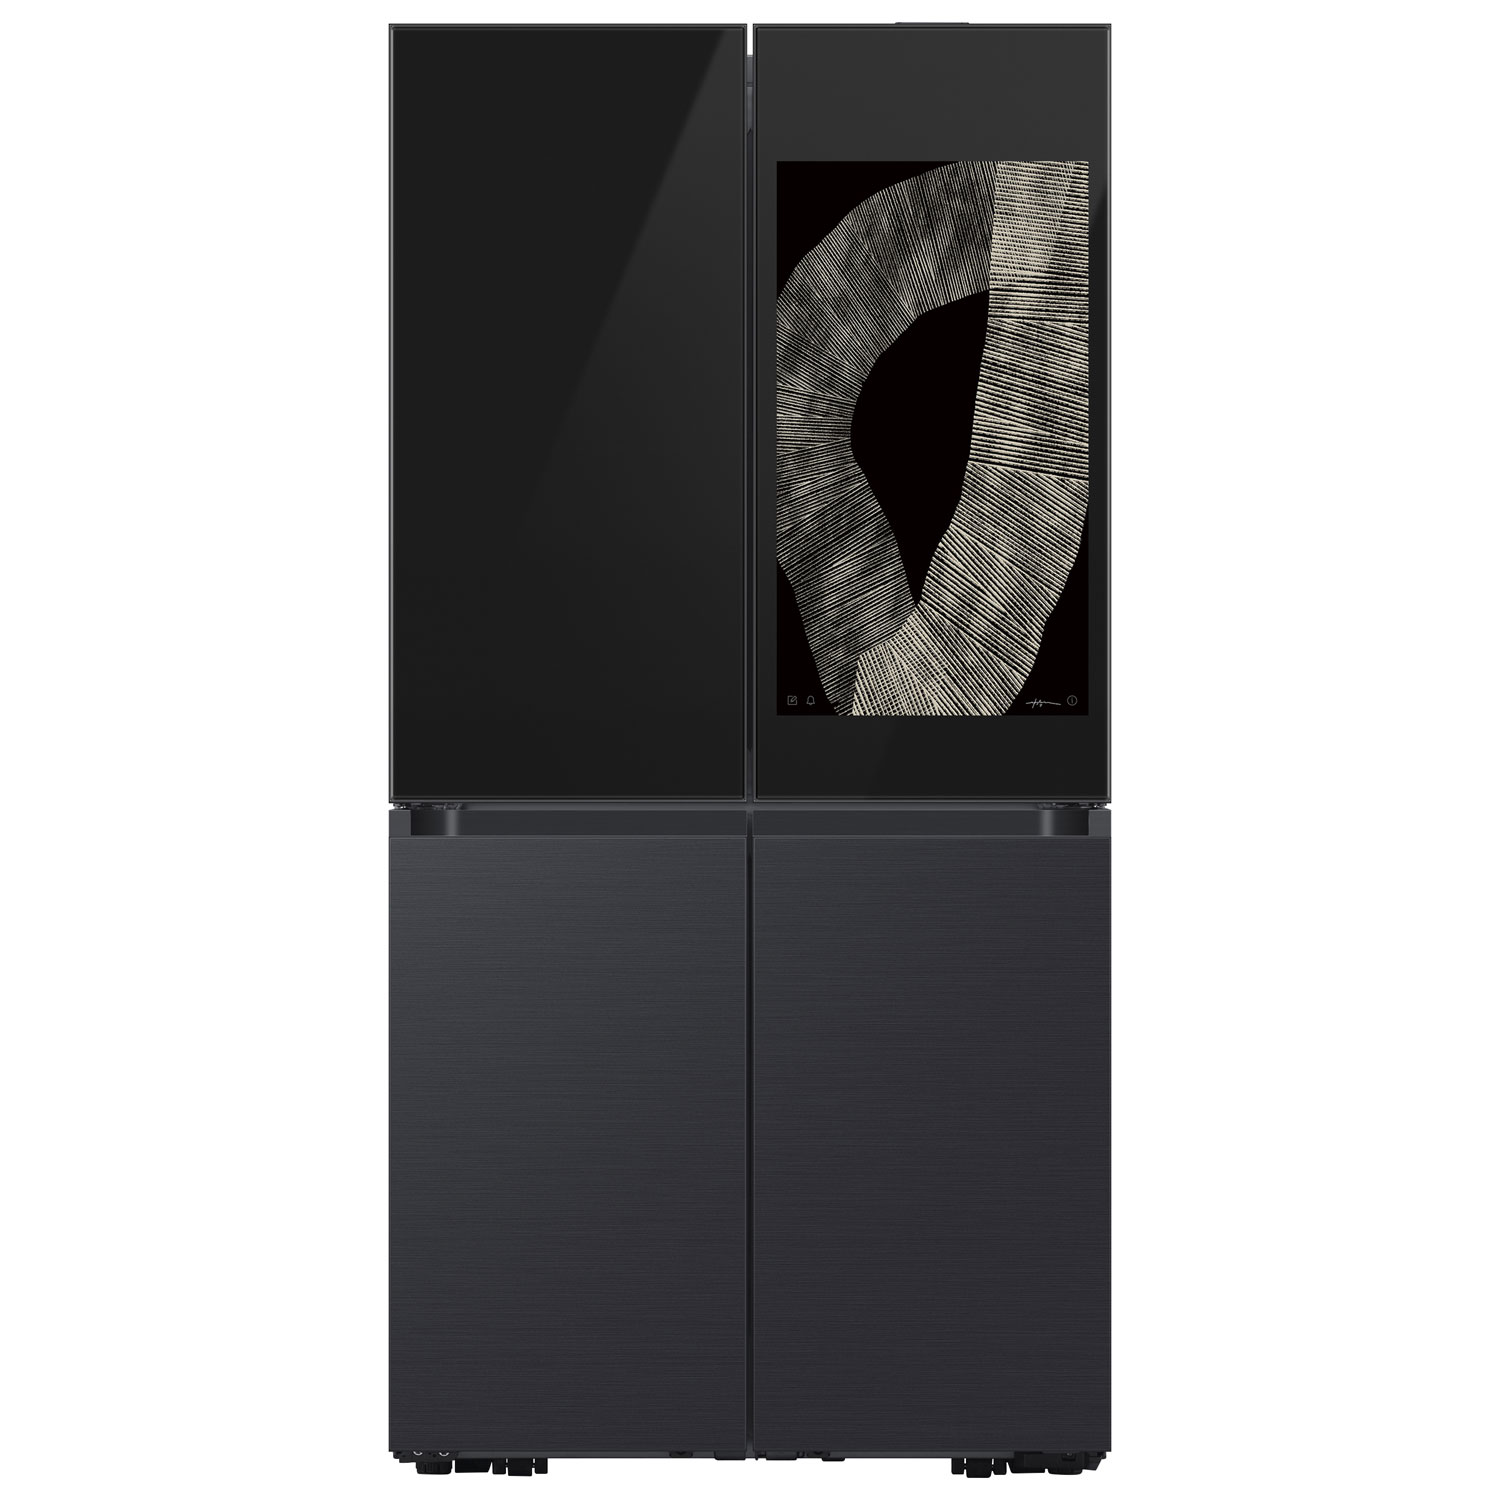 Samsung Family Hub 36" 22.5 Cu. Ft. French Door Refrigerator (RF23CB99008MAC) - Black Stainless Steel